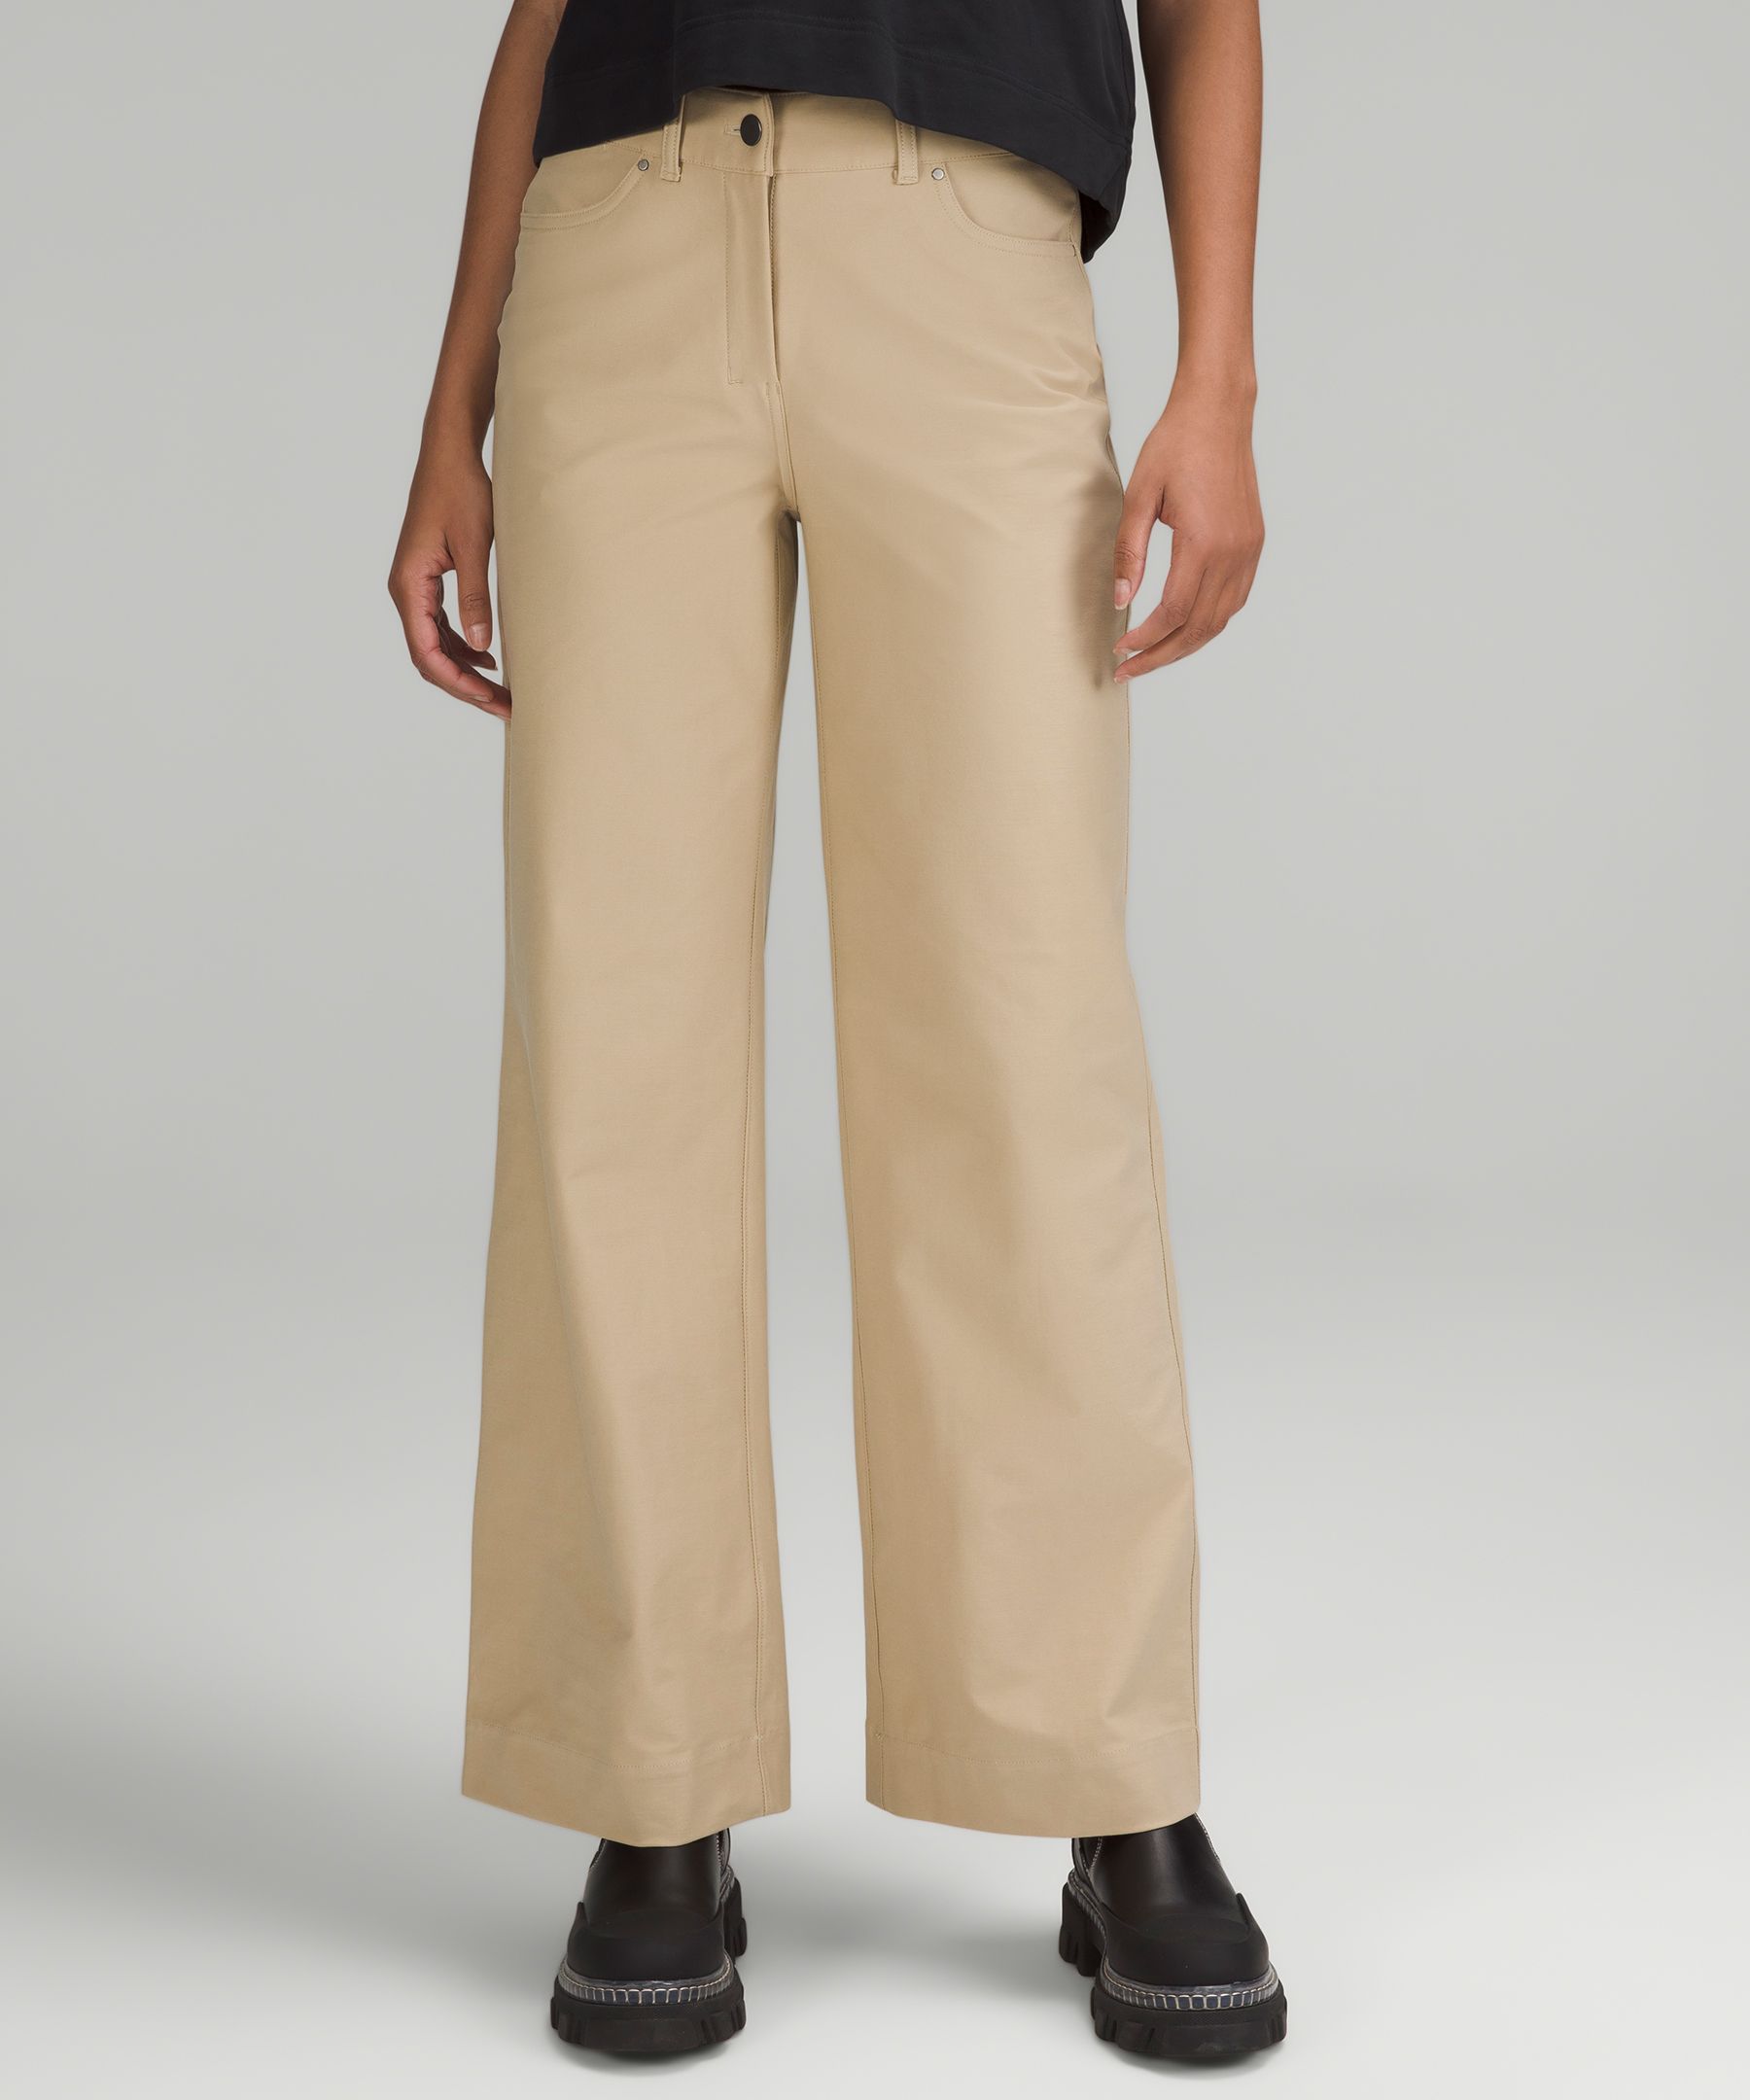 Lululemon City Sleek 5 Pocket High-Rise Wide-Leg Pant *Light Utilitech 新色特價